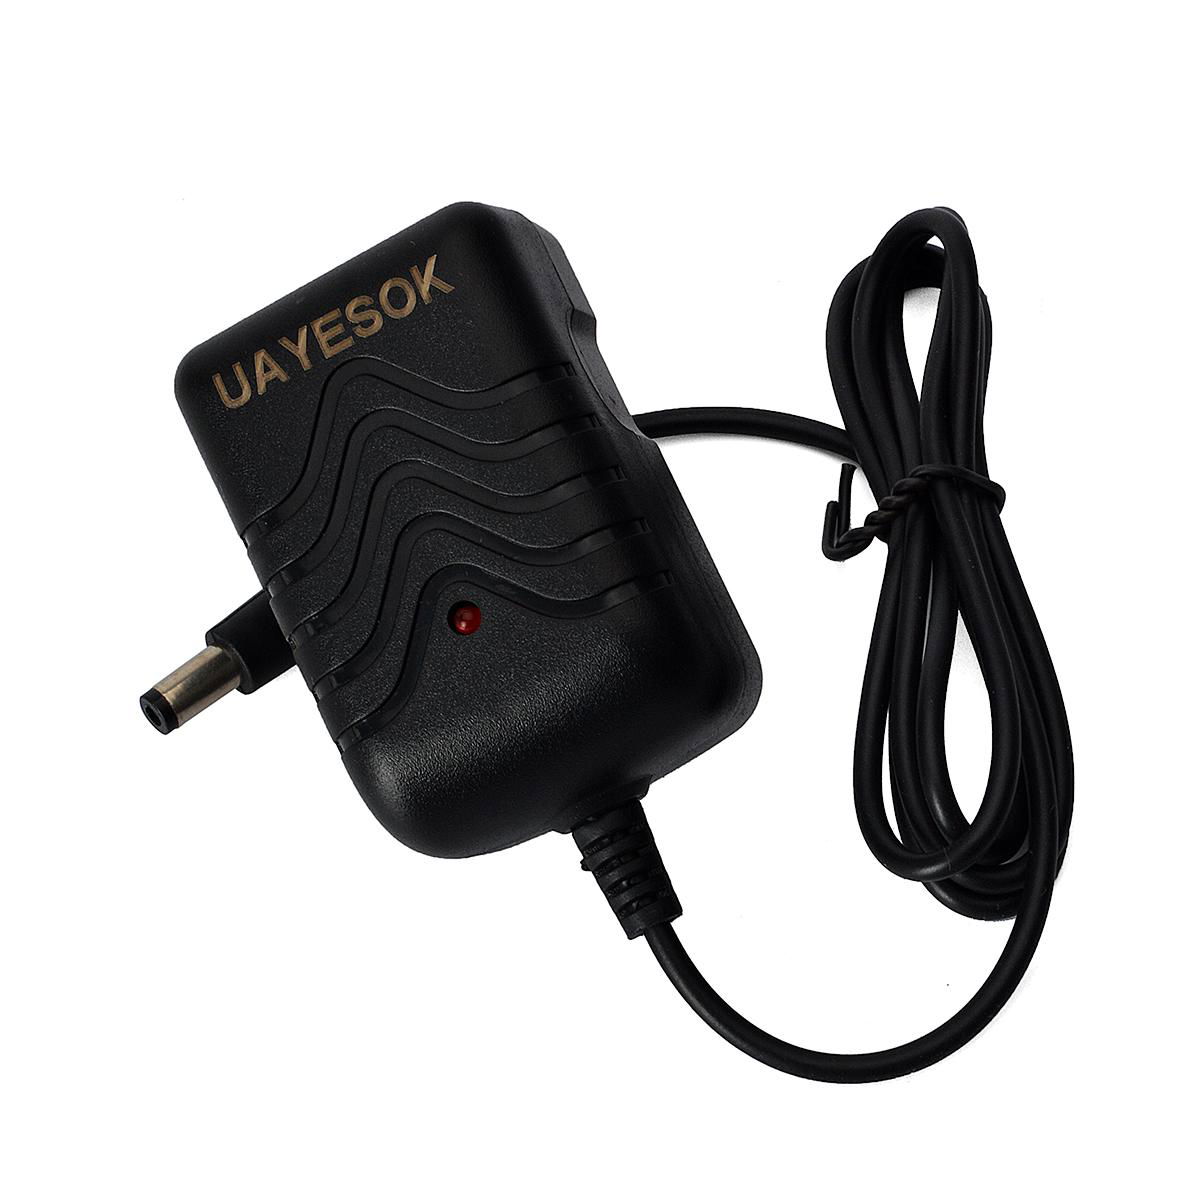 UAYESOK 2 Way Radio Charger Adapter for Baofeng UV-5R